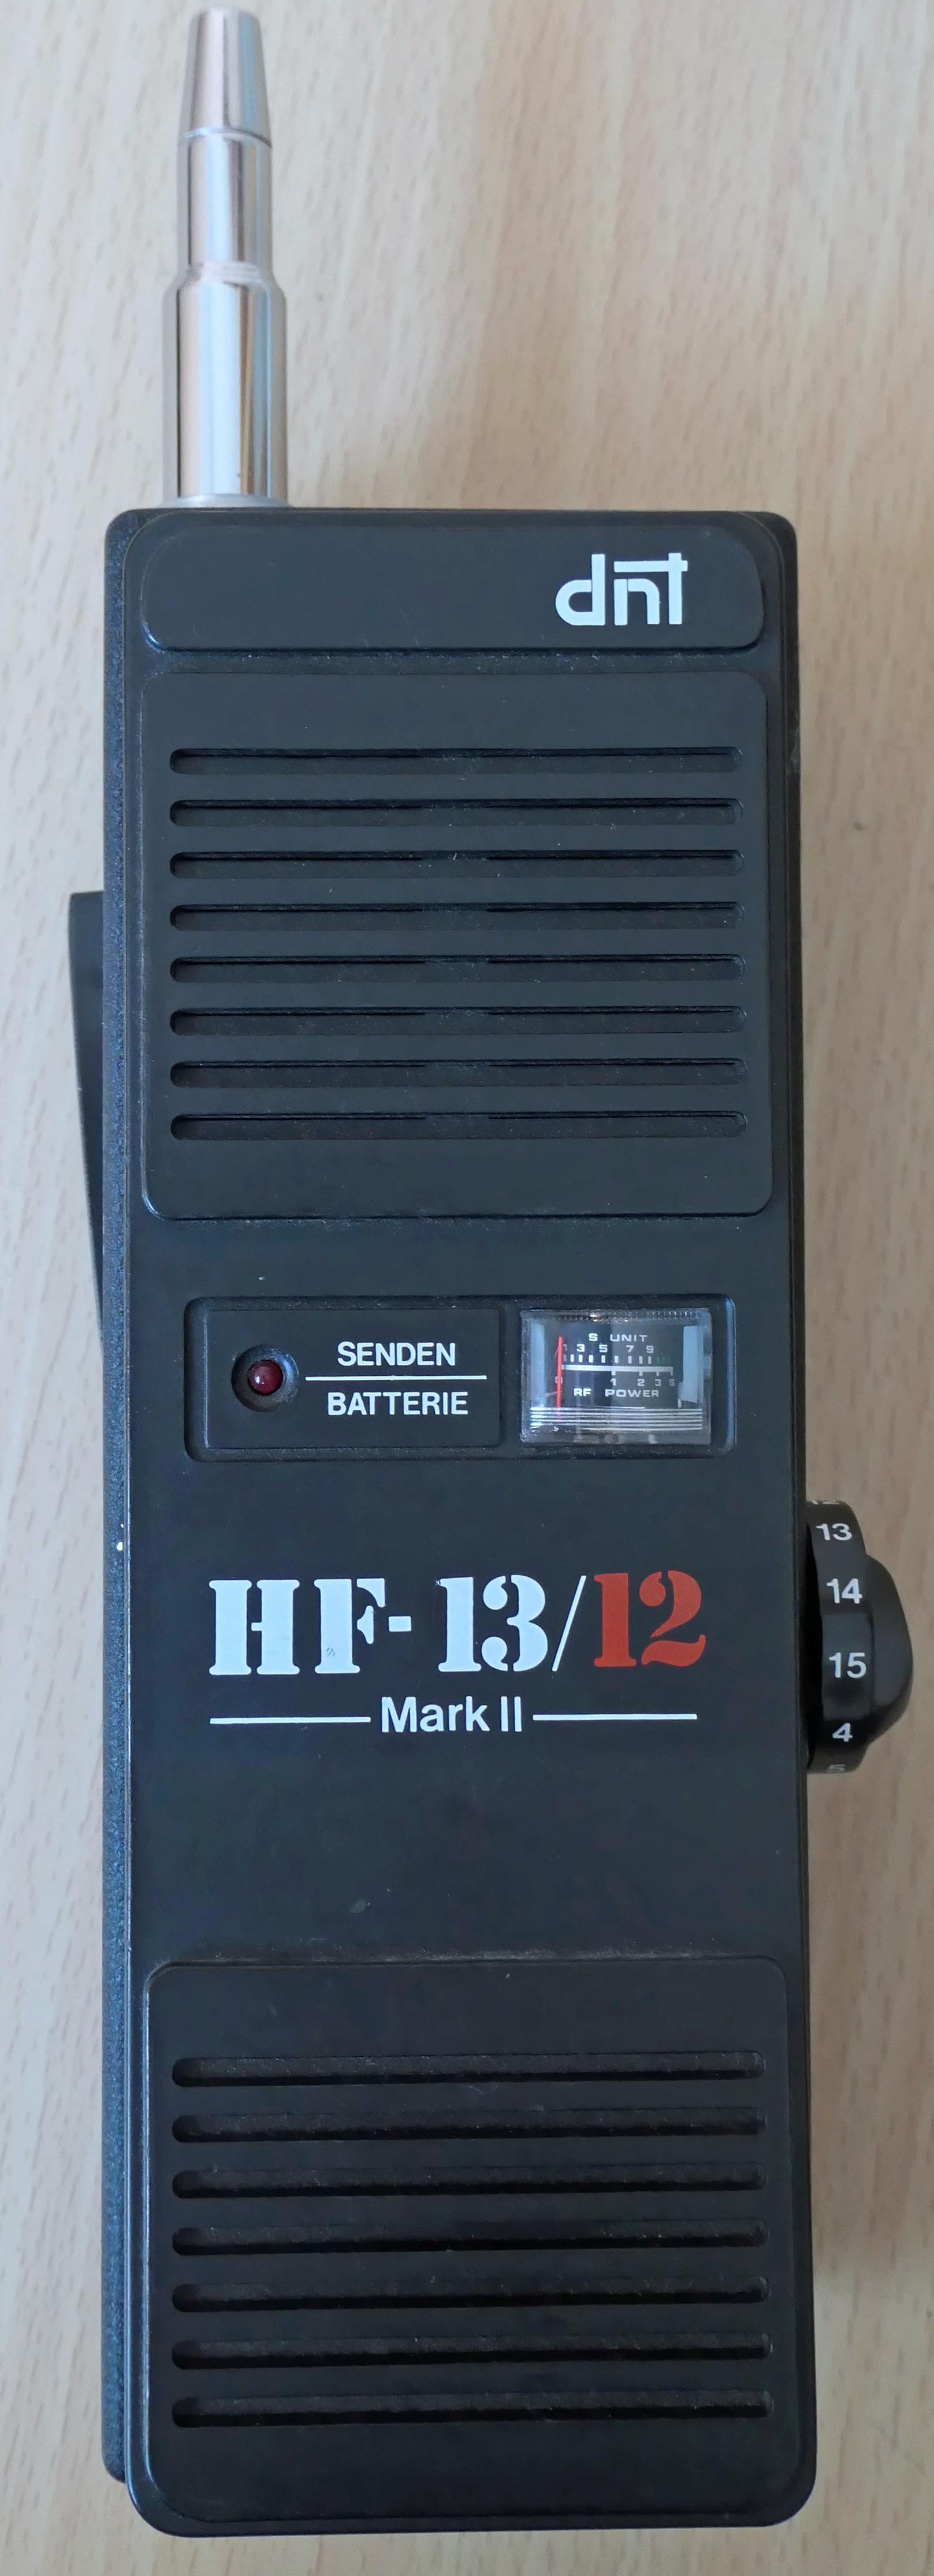 CB Handsprechfunkgerät	Basisstation DNT HF 13/12 Mark II (museum comp:ex CC BY-NC-SA)